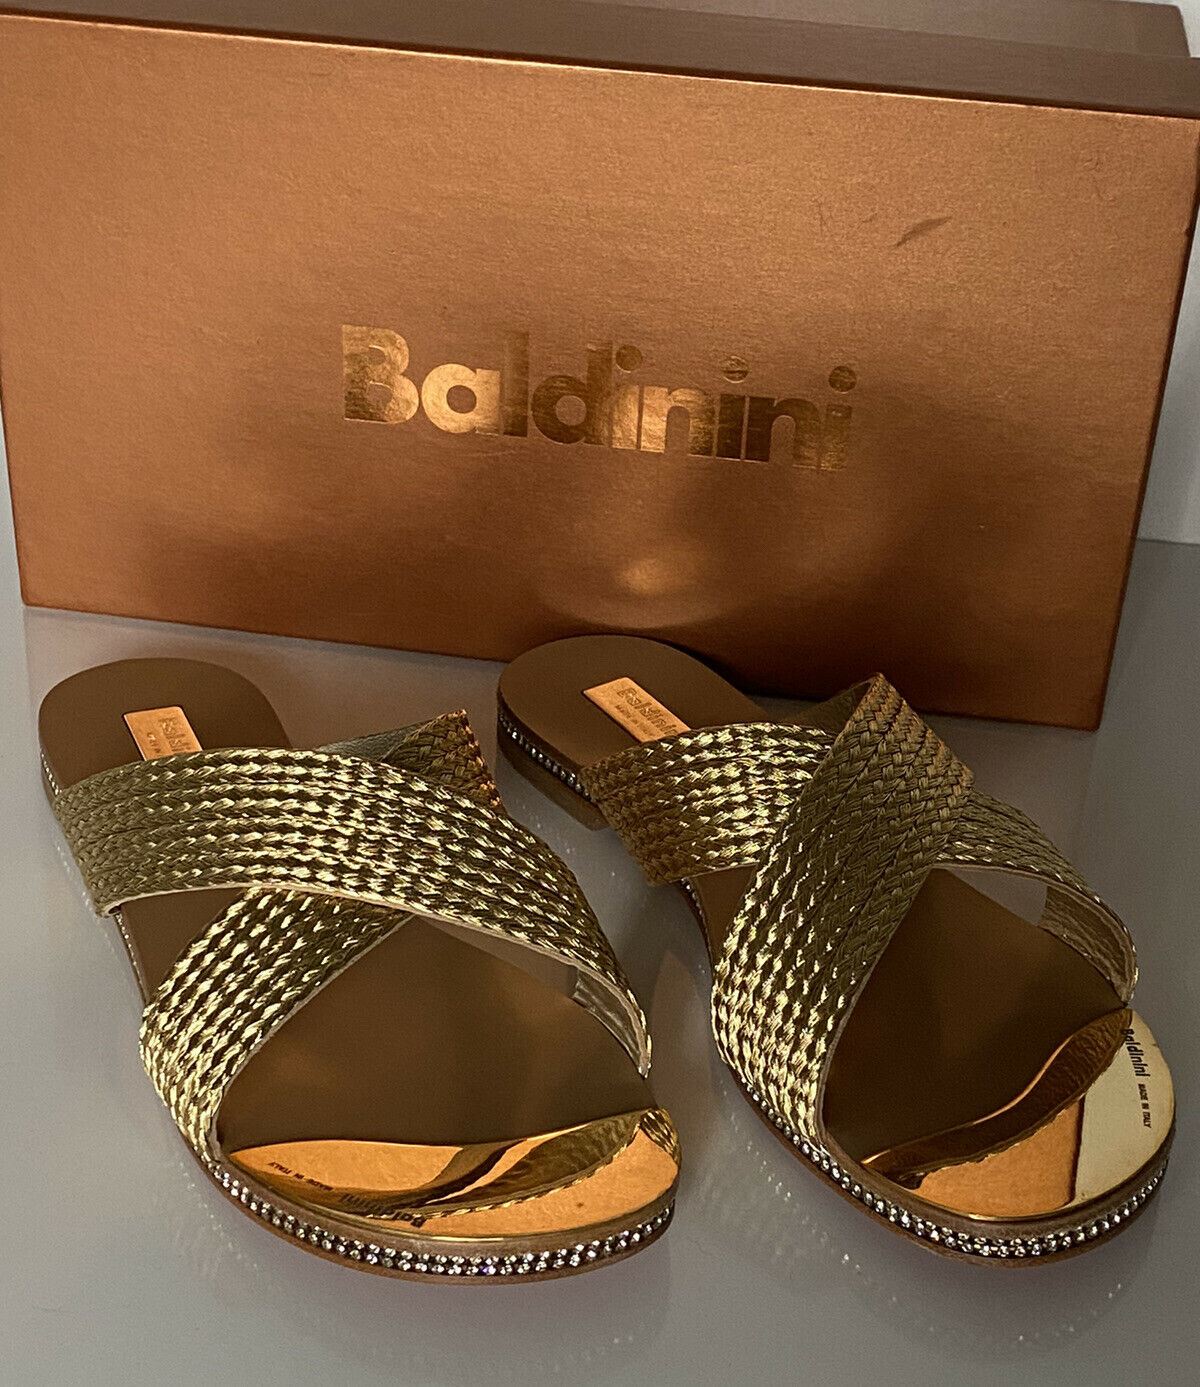 NIB Baldinini Women's Sandals Gold 7 US (37.5 Eu) 798723 Made in Italy